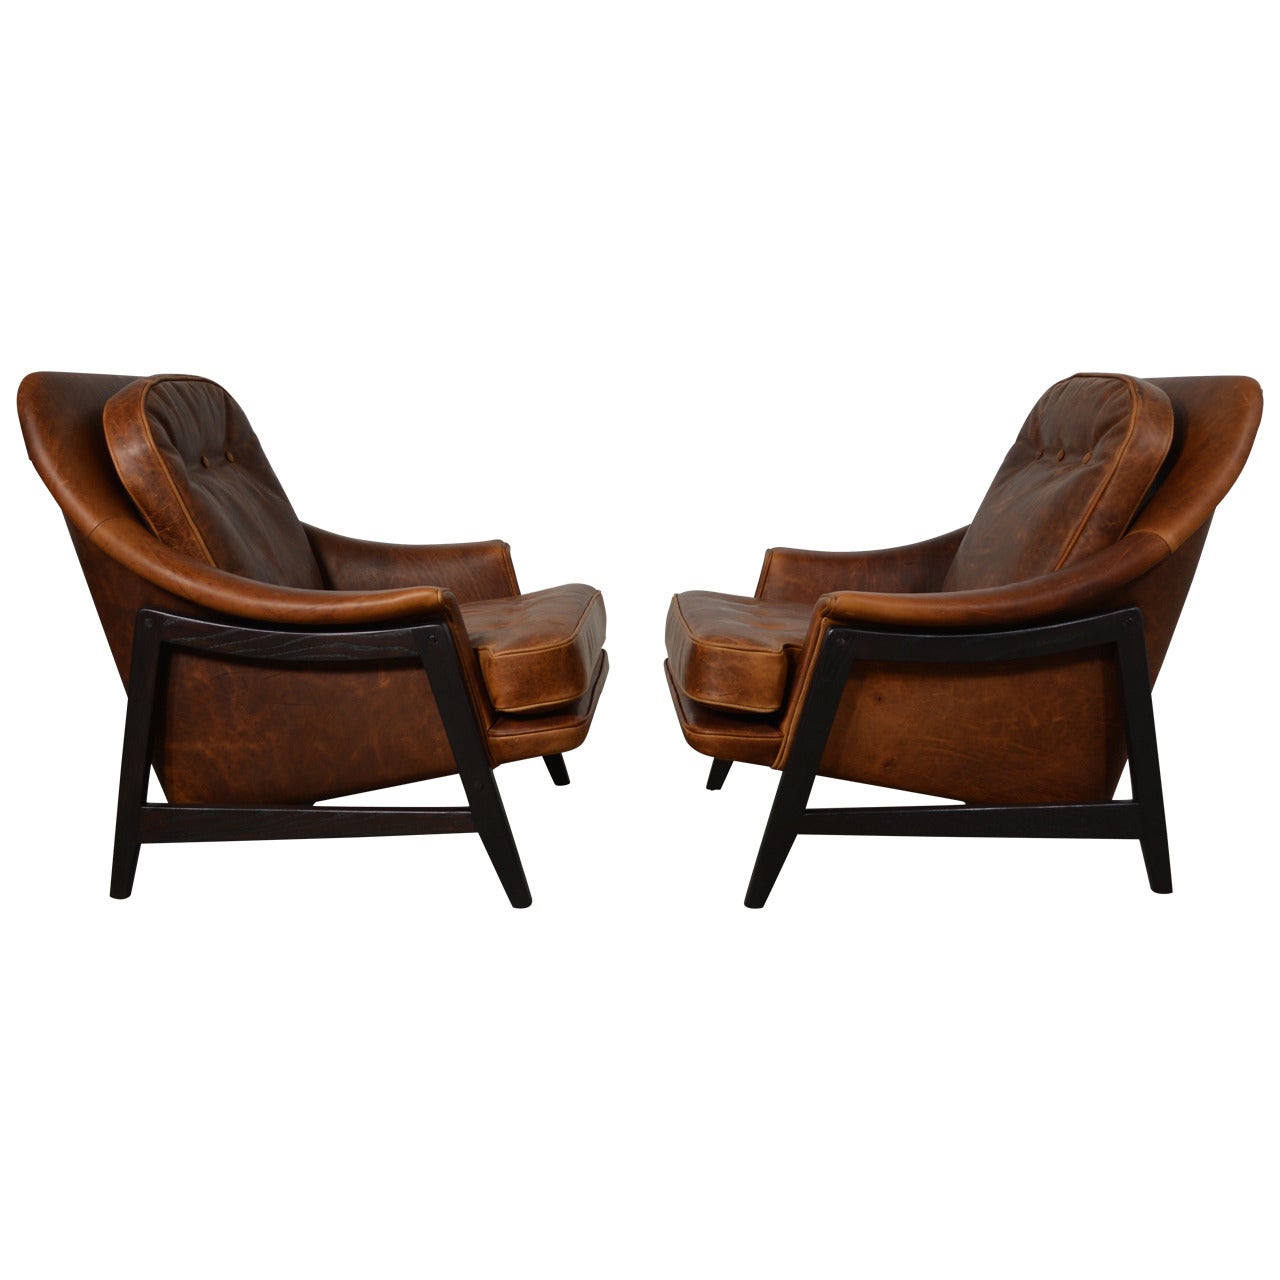 Edward Wormley Leather Janus Lounge Chairs